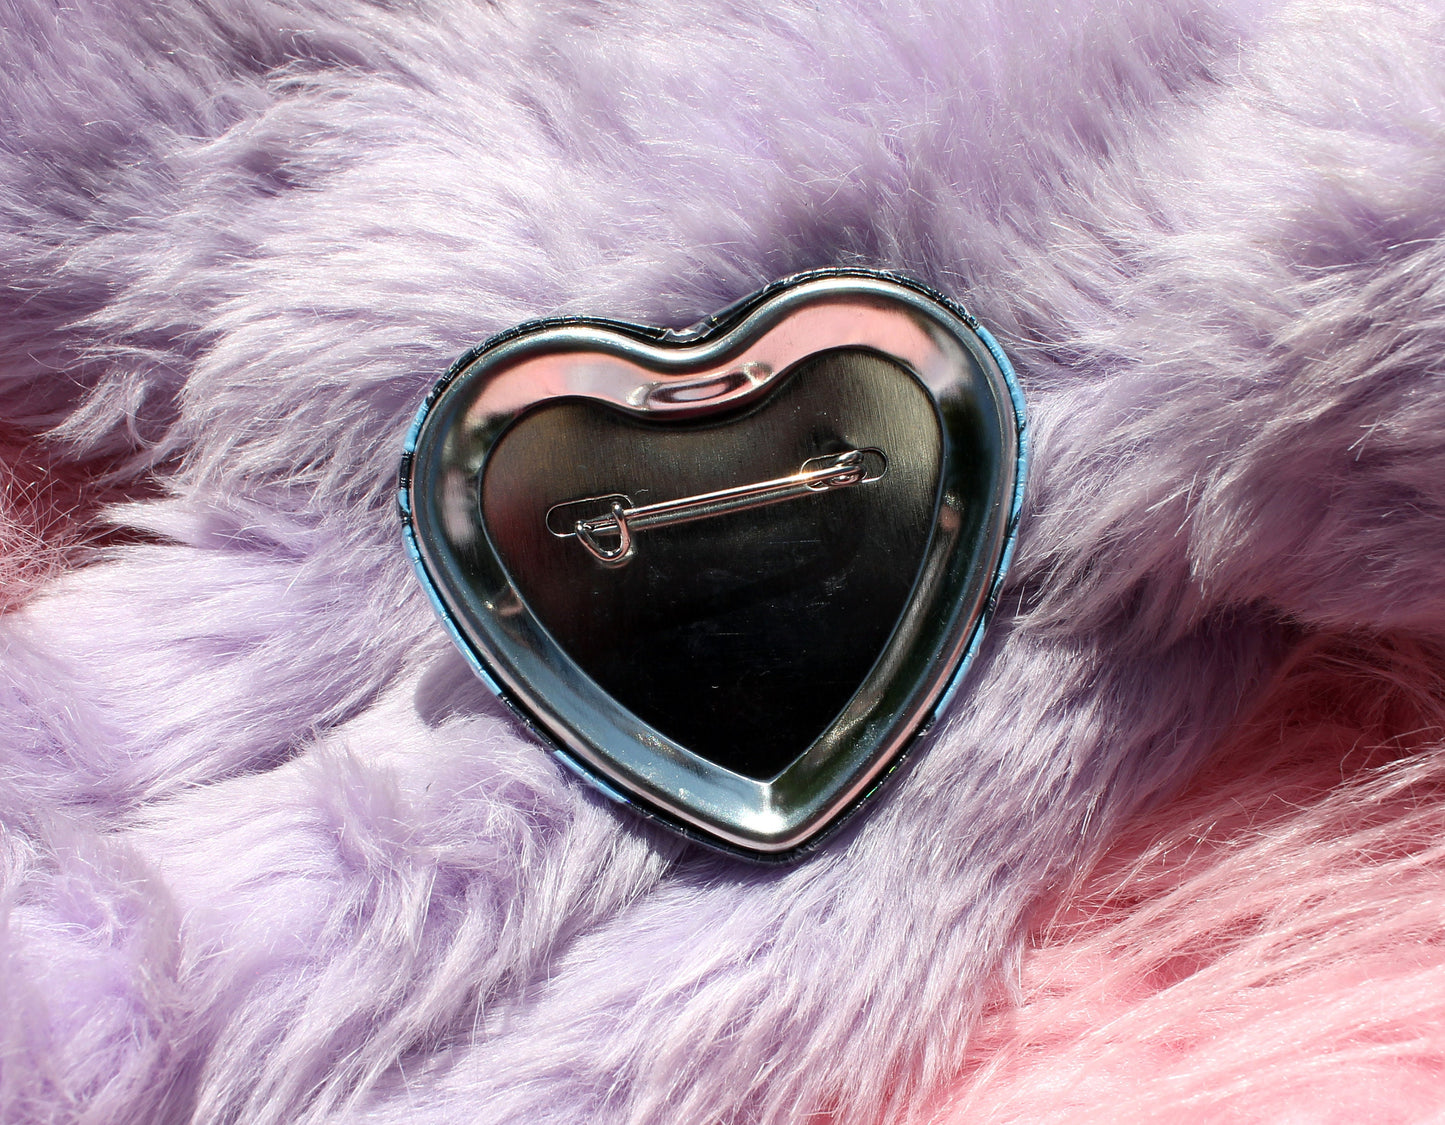 Incubae Heart Badges (55mm)